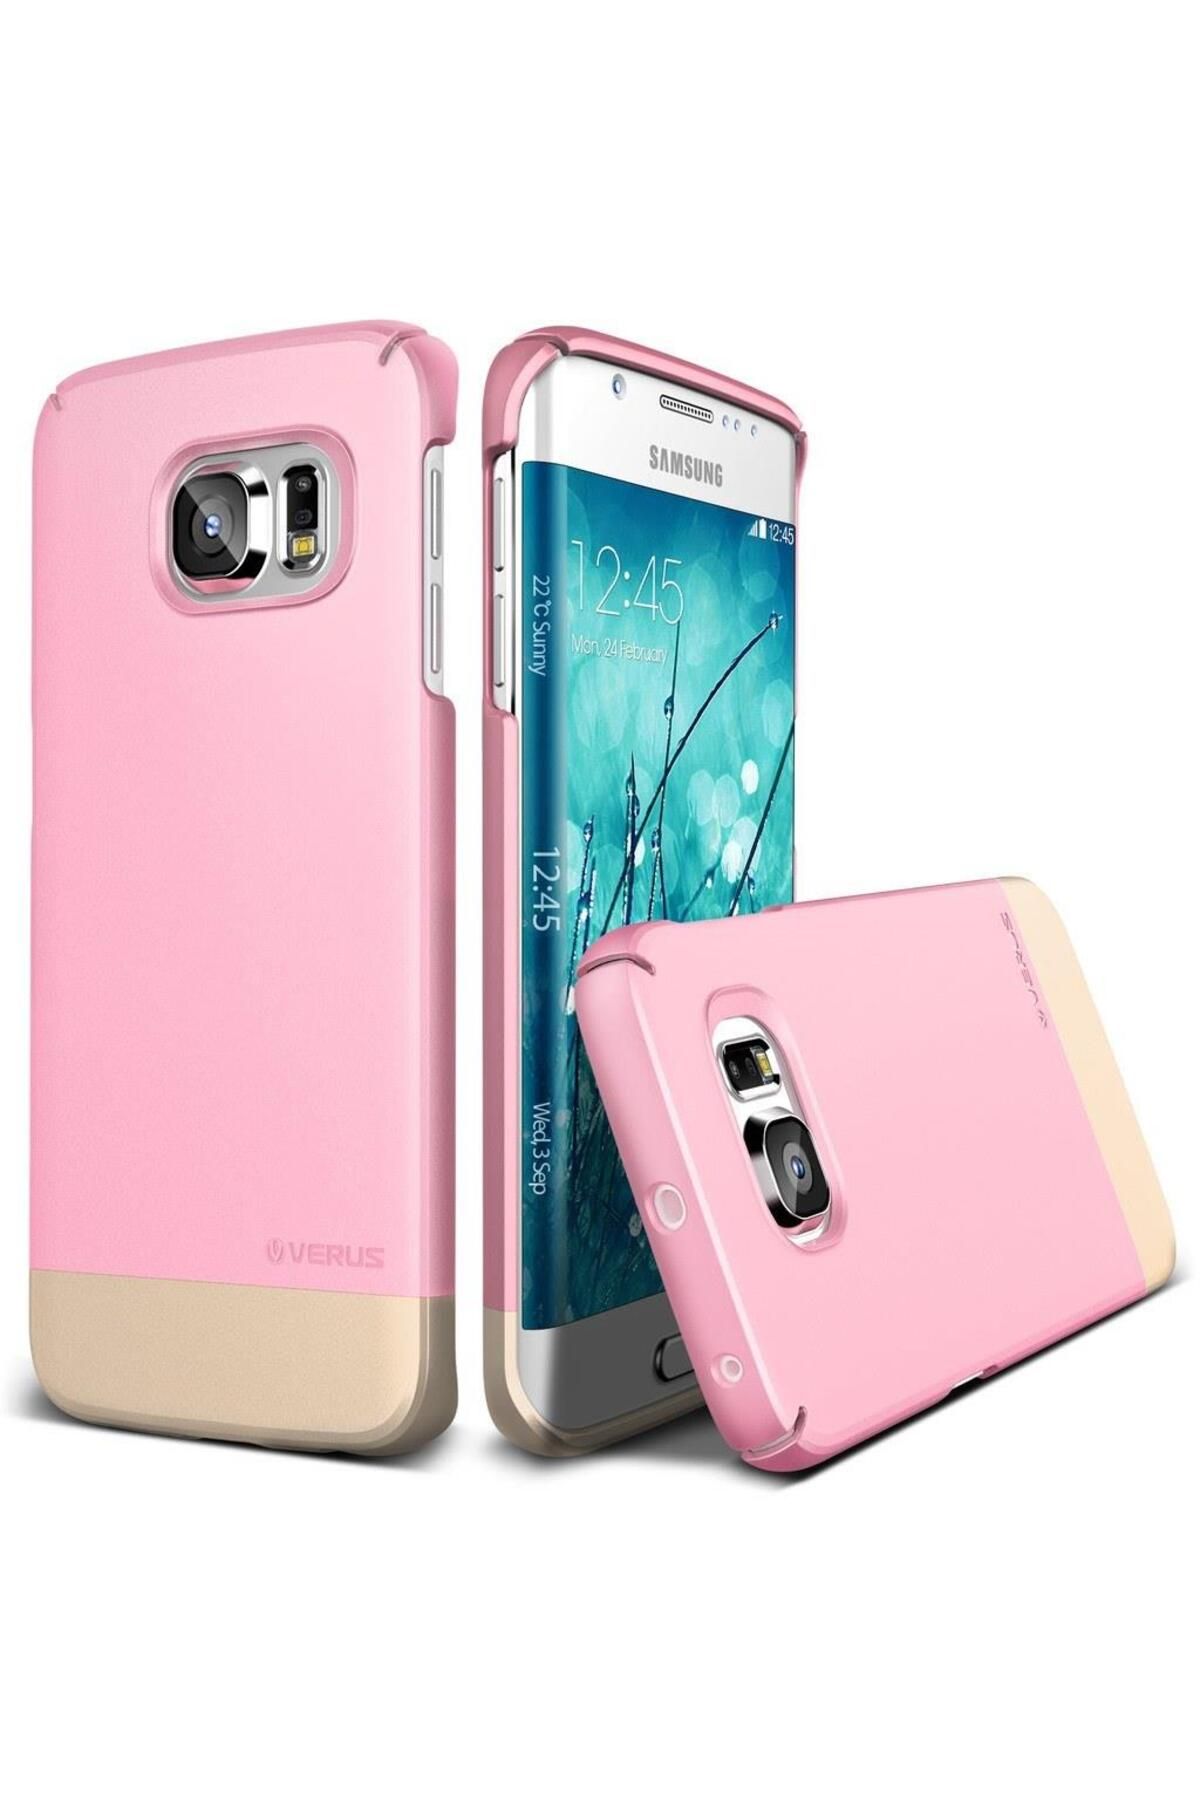 Verus Galaxy S6 Edge Ile Uyumlu Case 2link Kılıf Sugar Pink